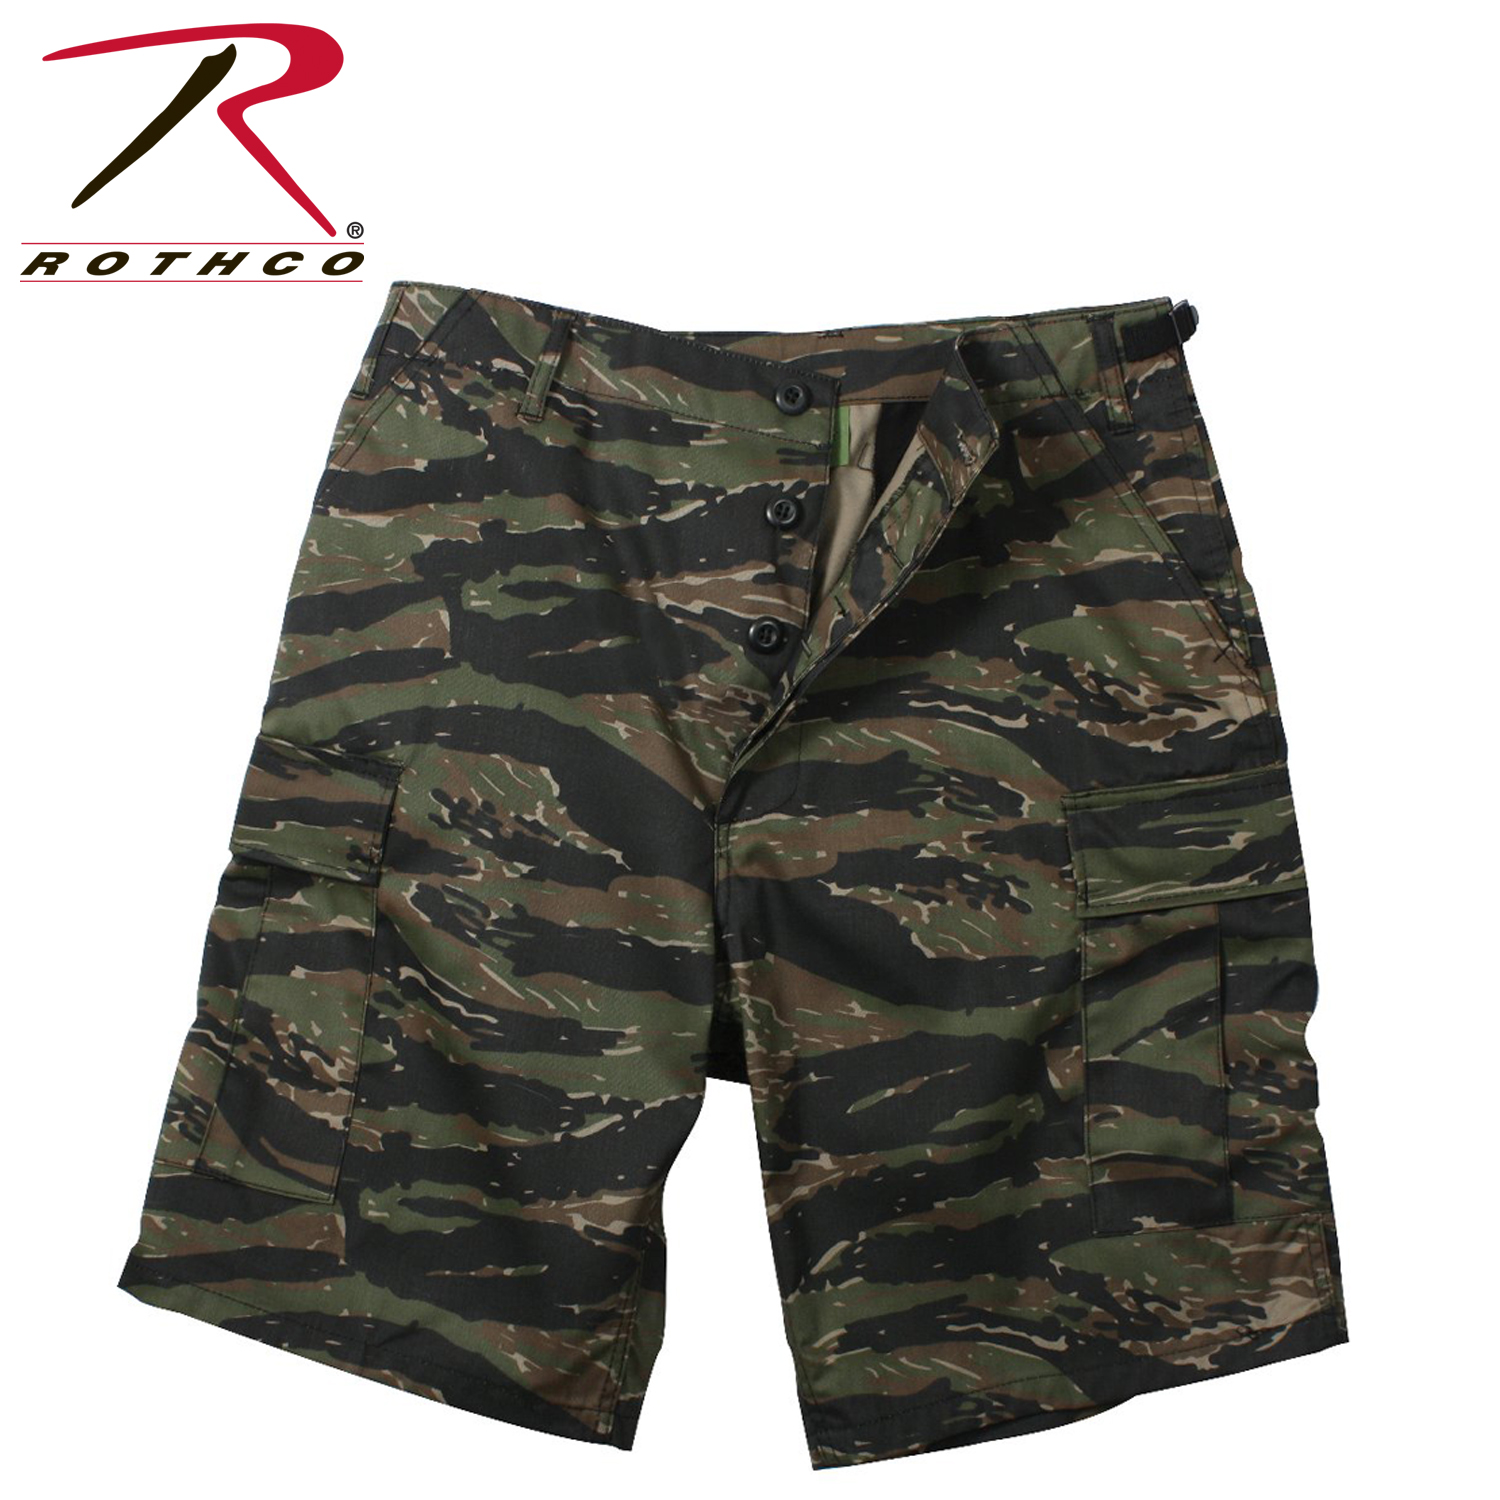 Rothco 7085 Tiger Stripe Camo BDU Shorts | eBay